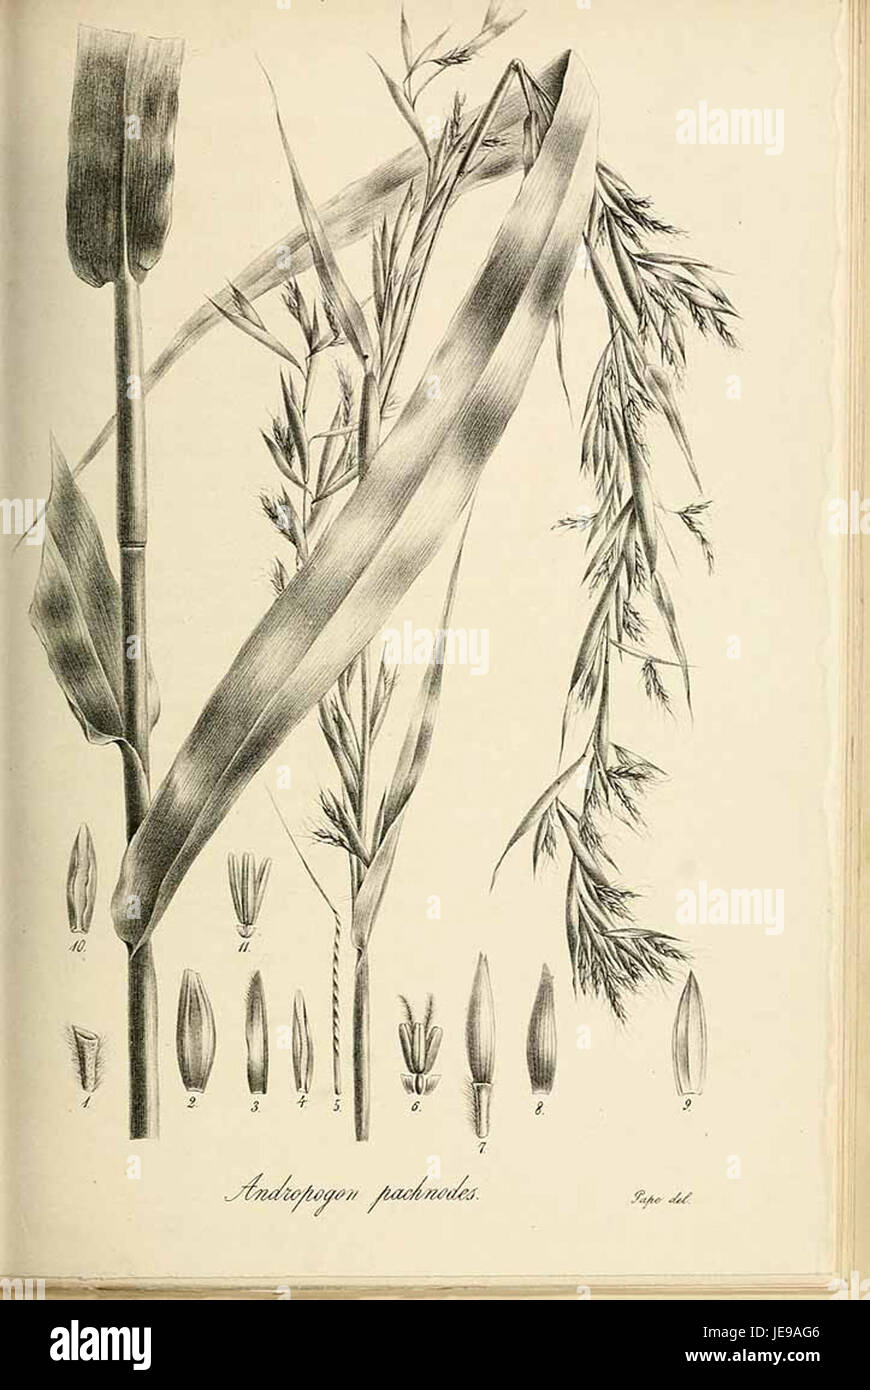 Andropogon pachnodes - Species graminum - Volume 3 Stock Photo